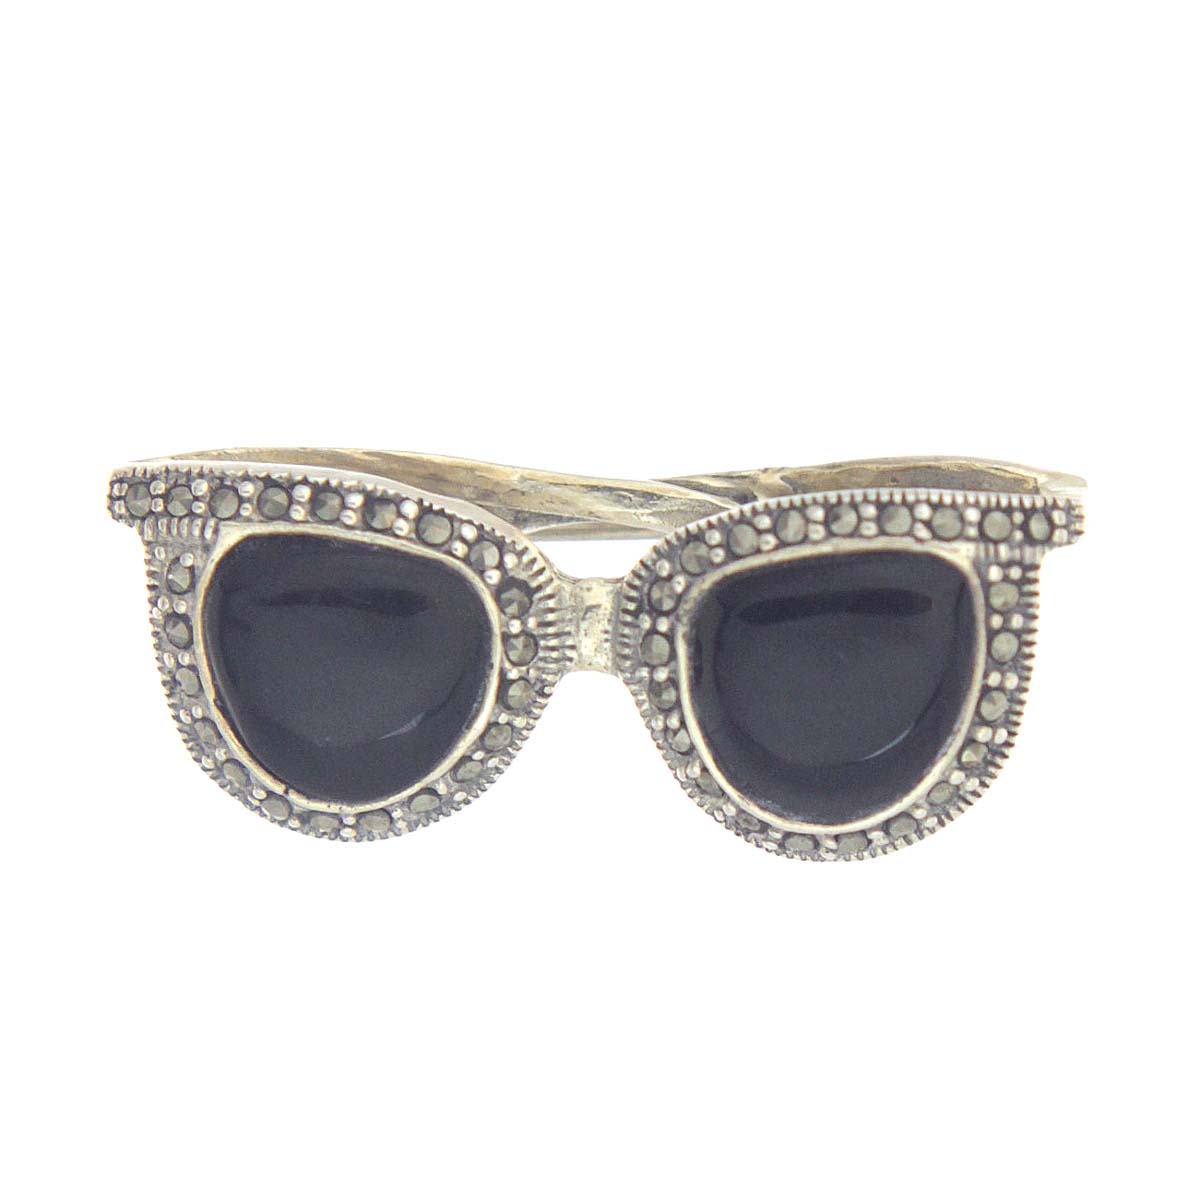 Sunglasses Pin Black Onyx Sterling Silver